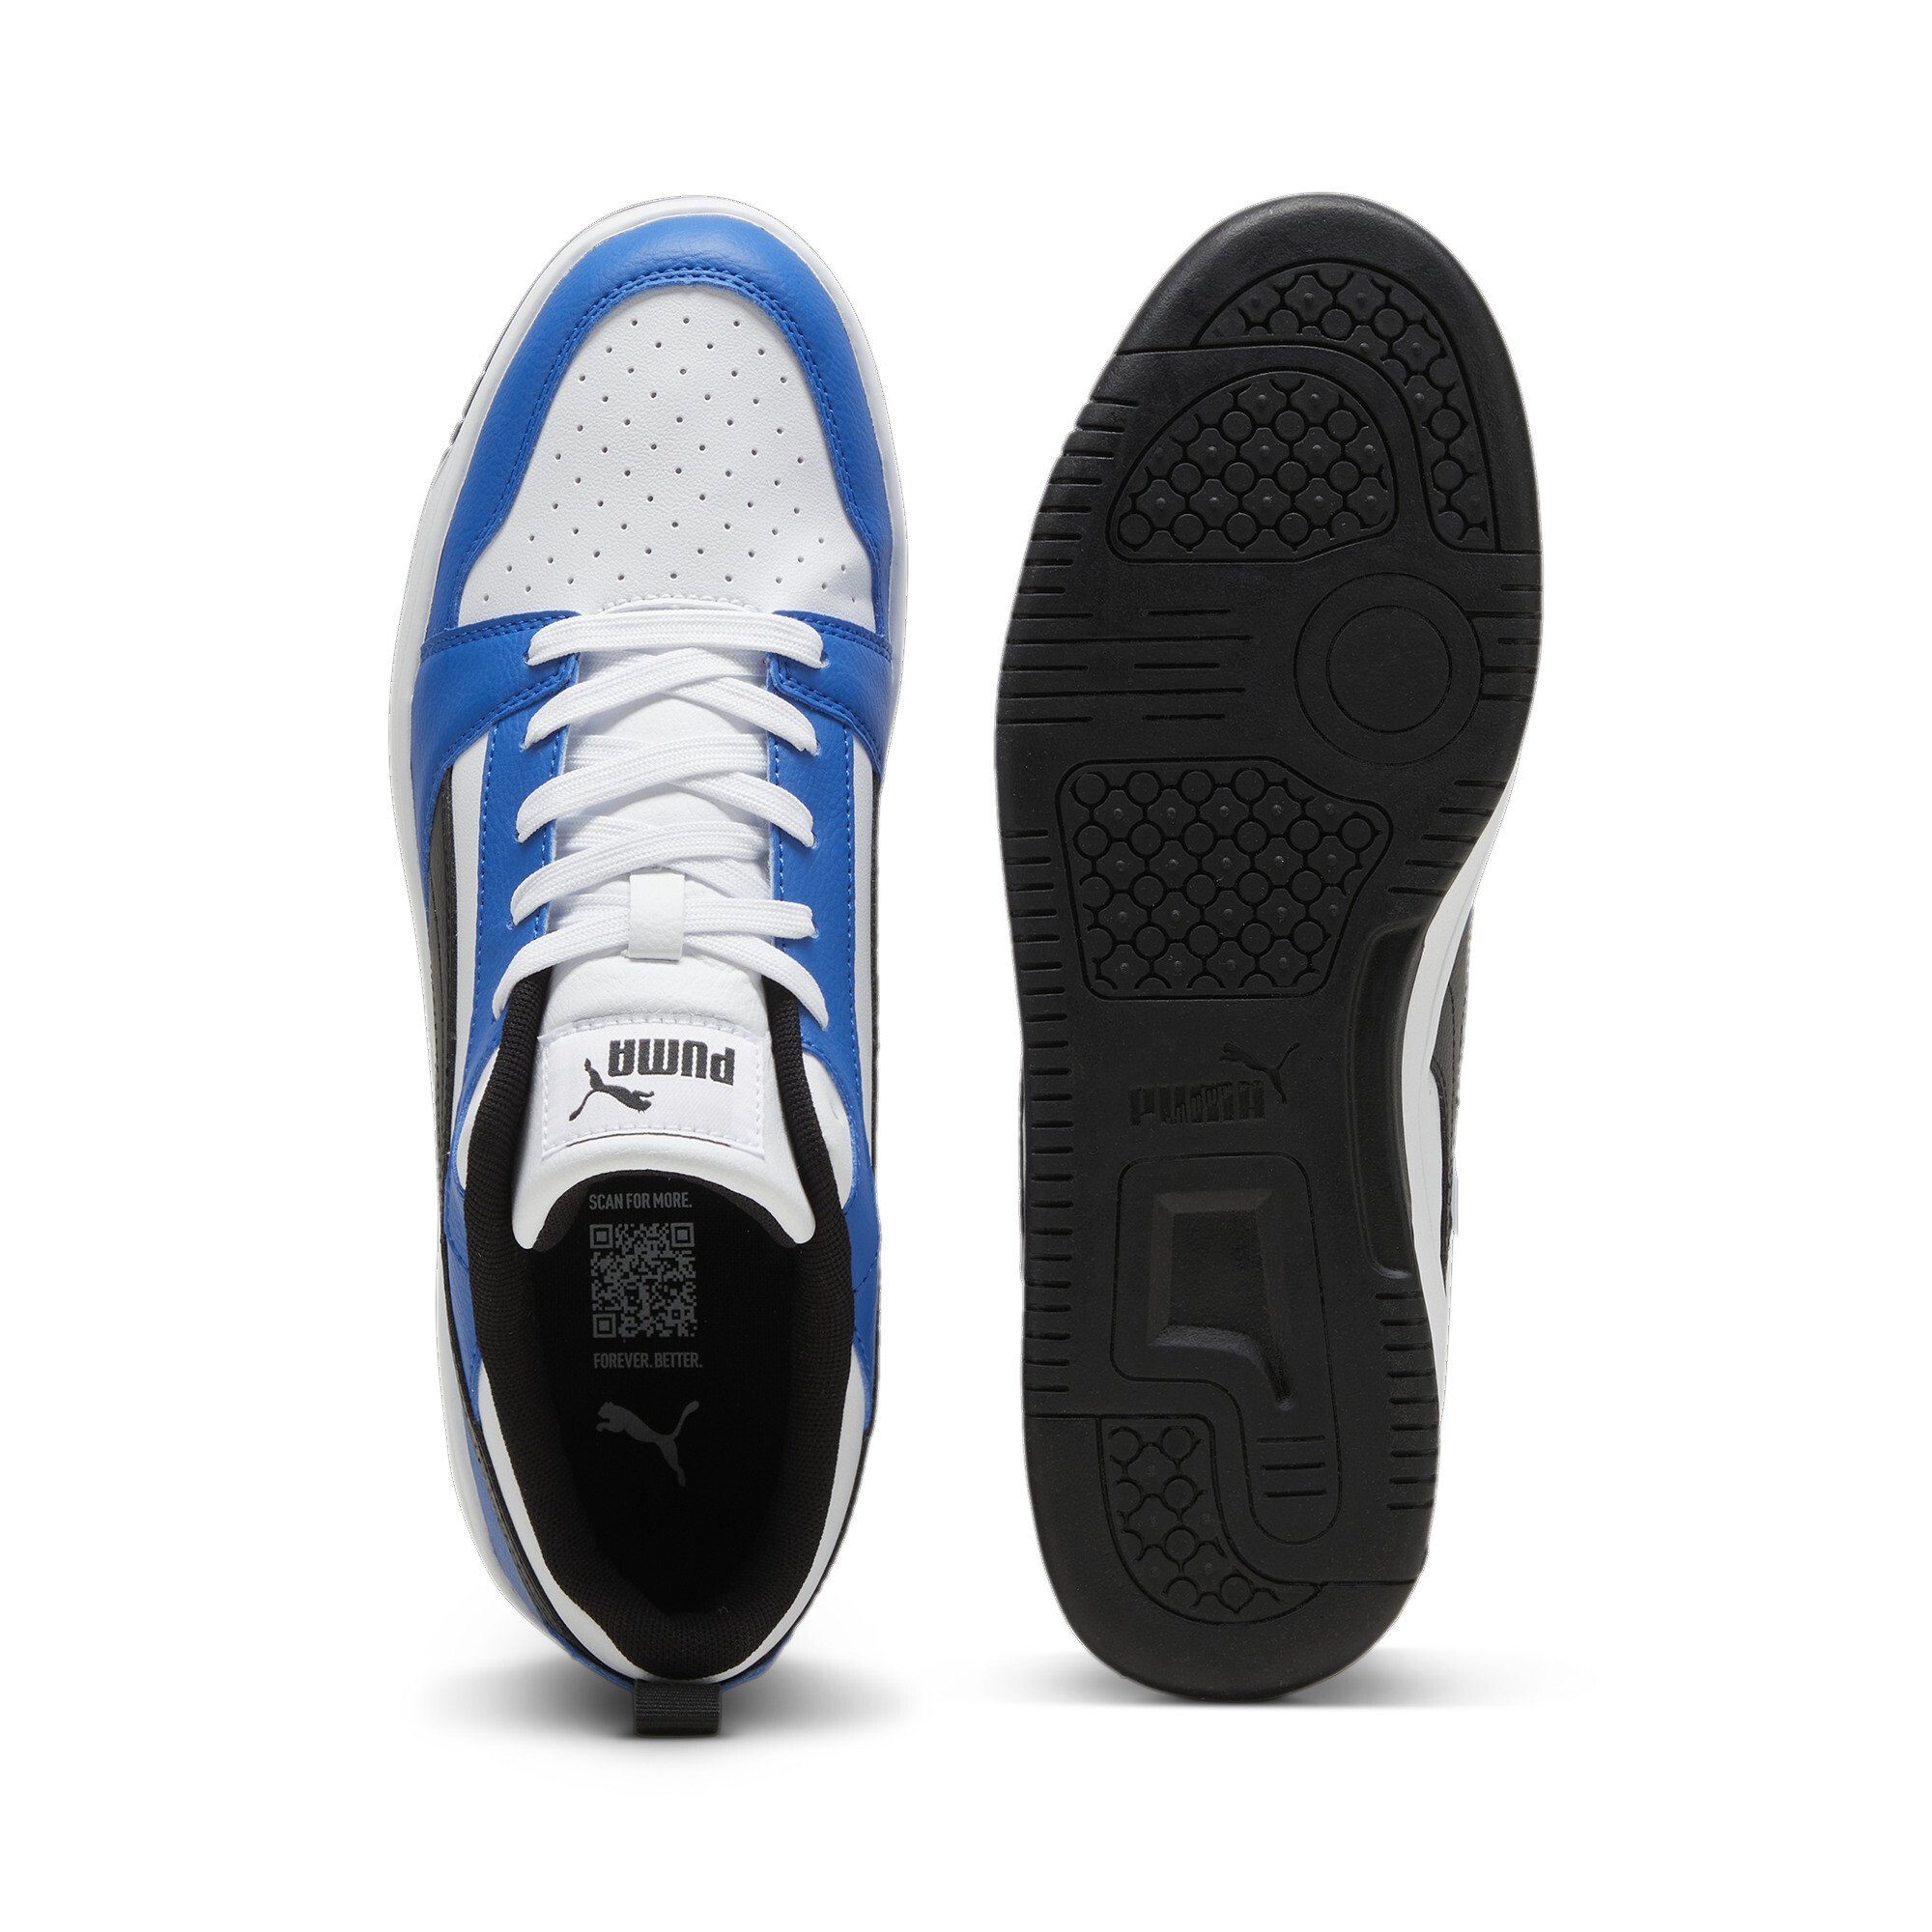 Low Erwachsene Sneaker Rebound V6 Team Sneakers Blue White PUMA Black Royal